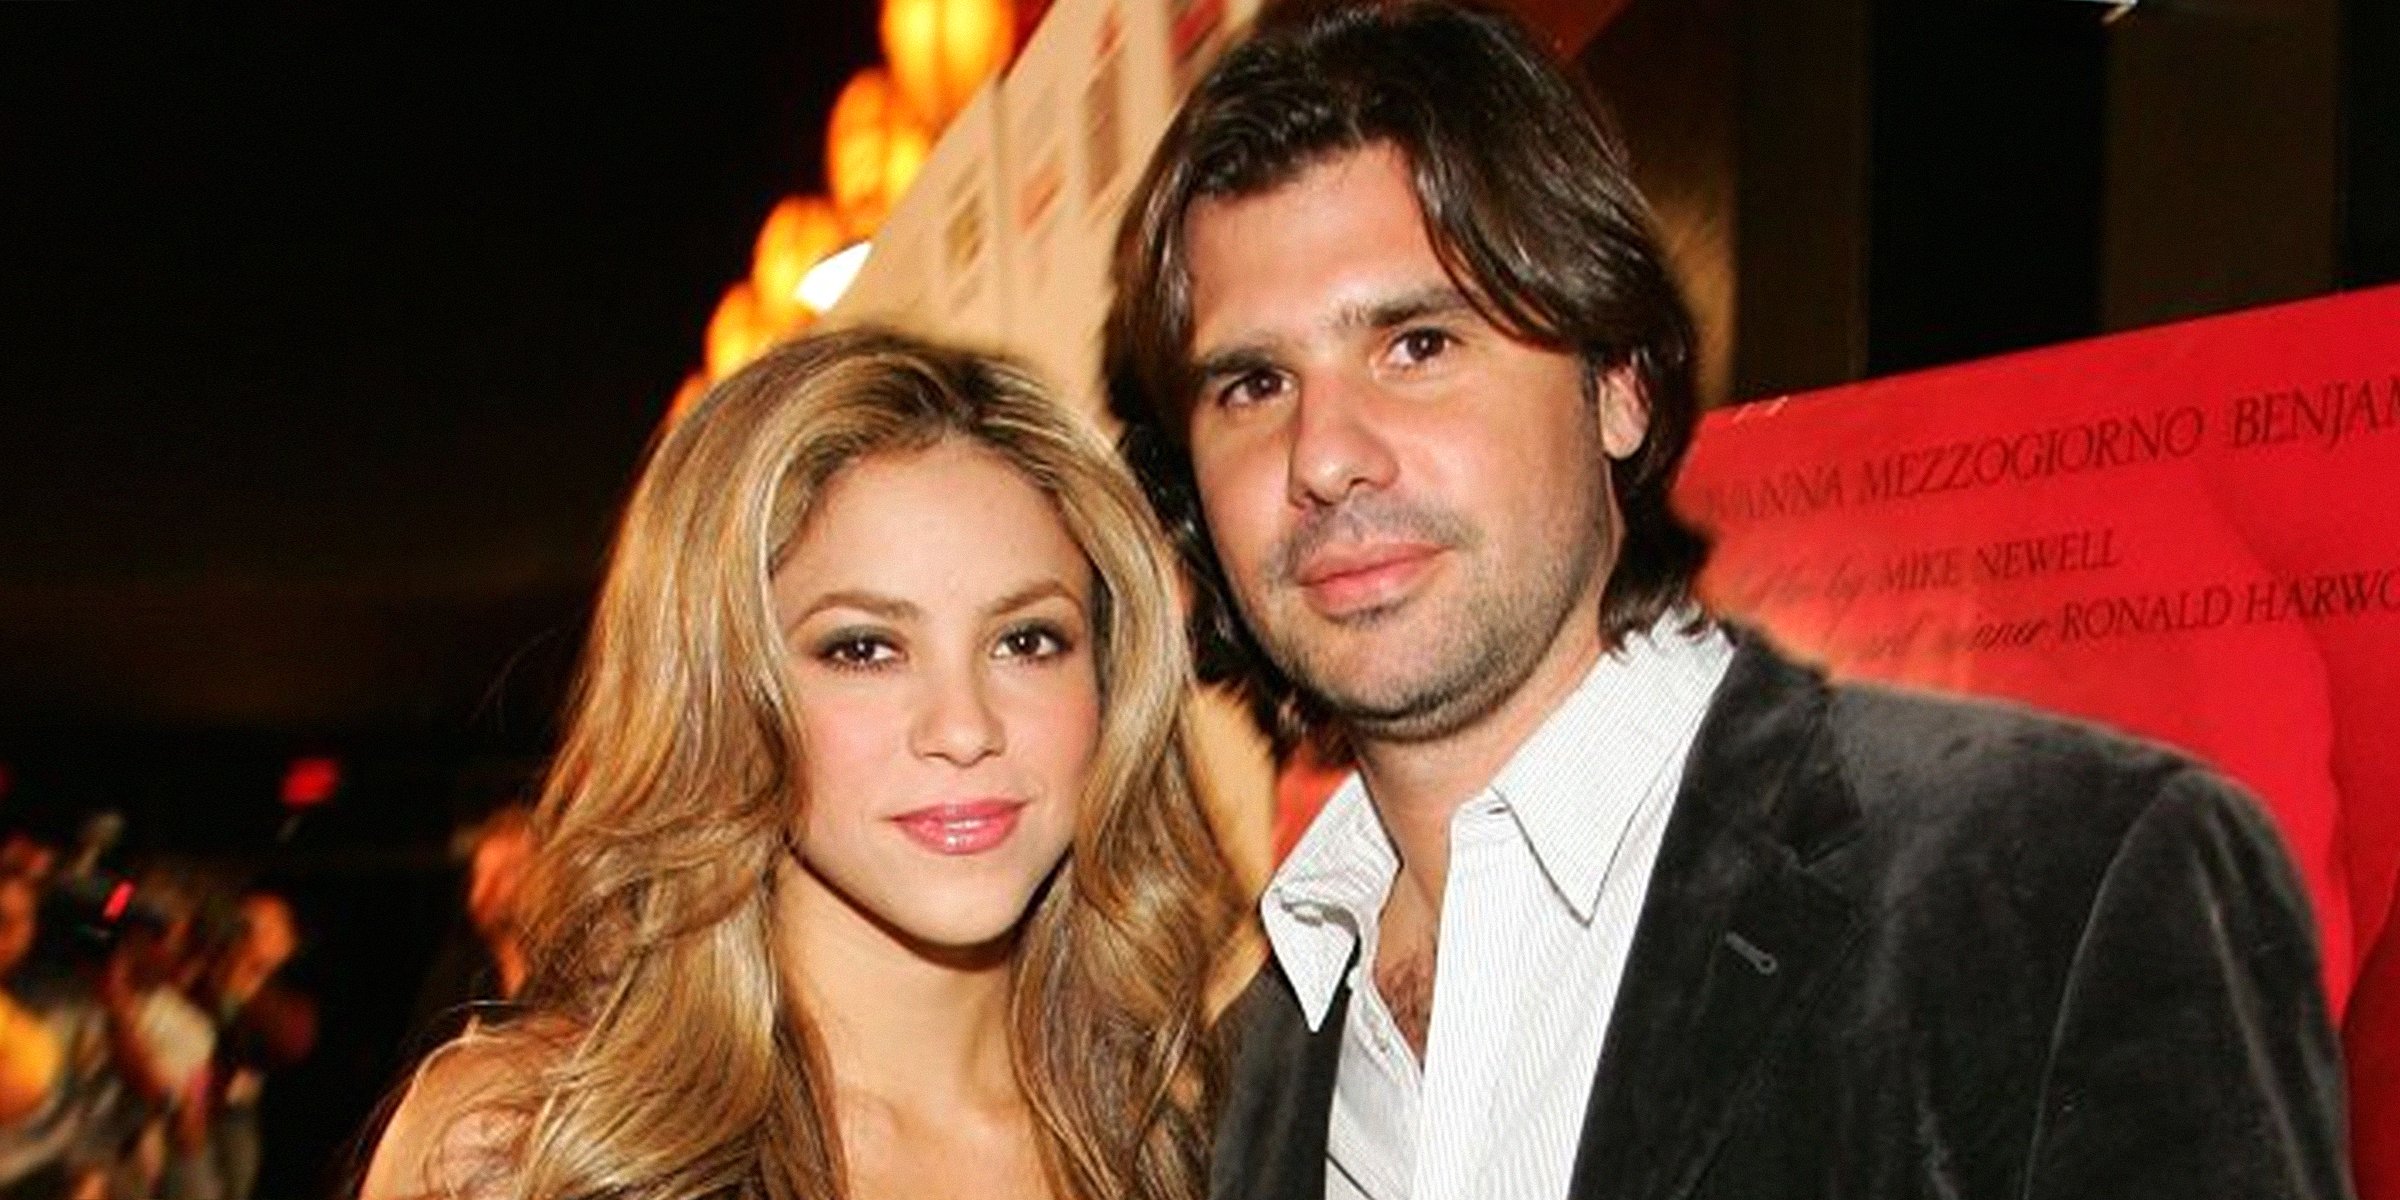 Antonio de la Rúa and Shakira Isabel Mebarak Ripoll | Source: Getty Images